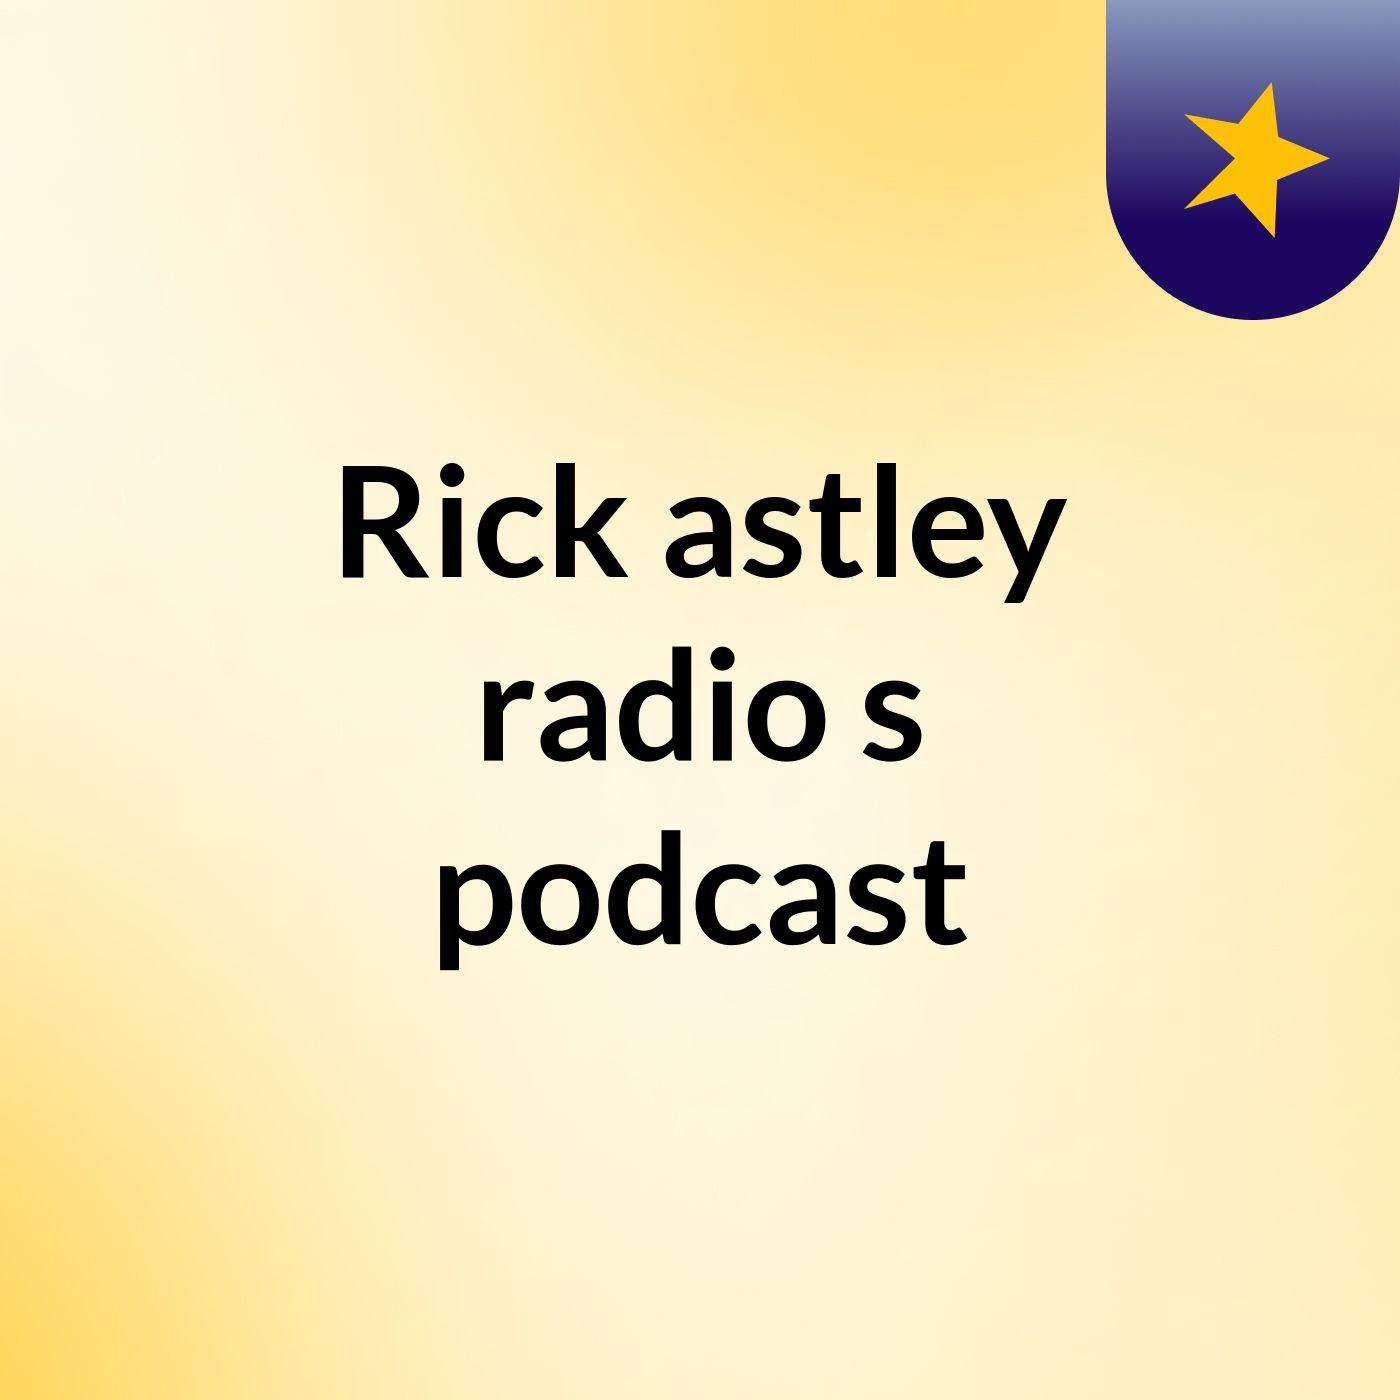 Rick astley radio's